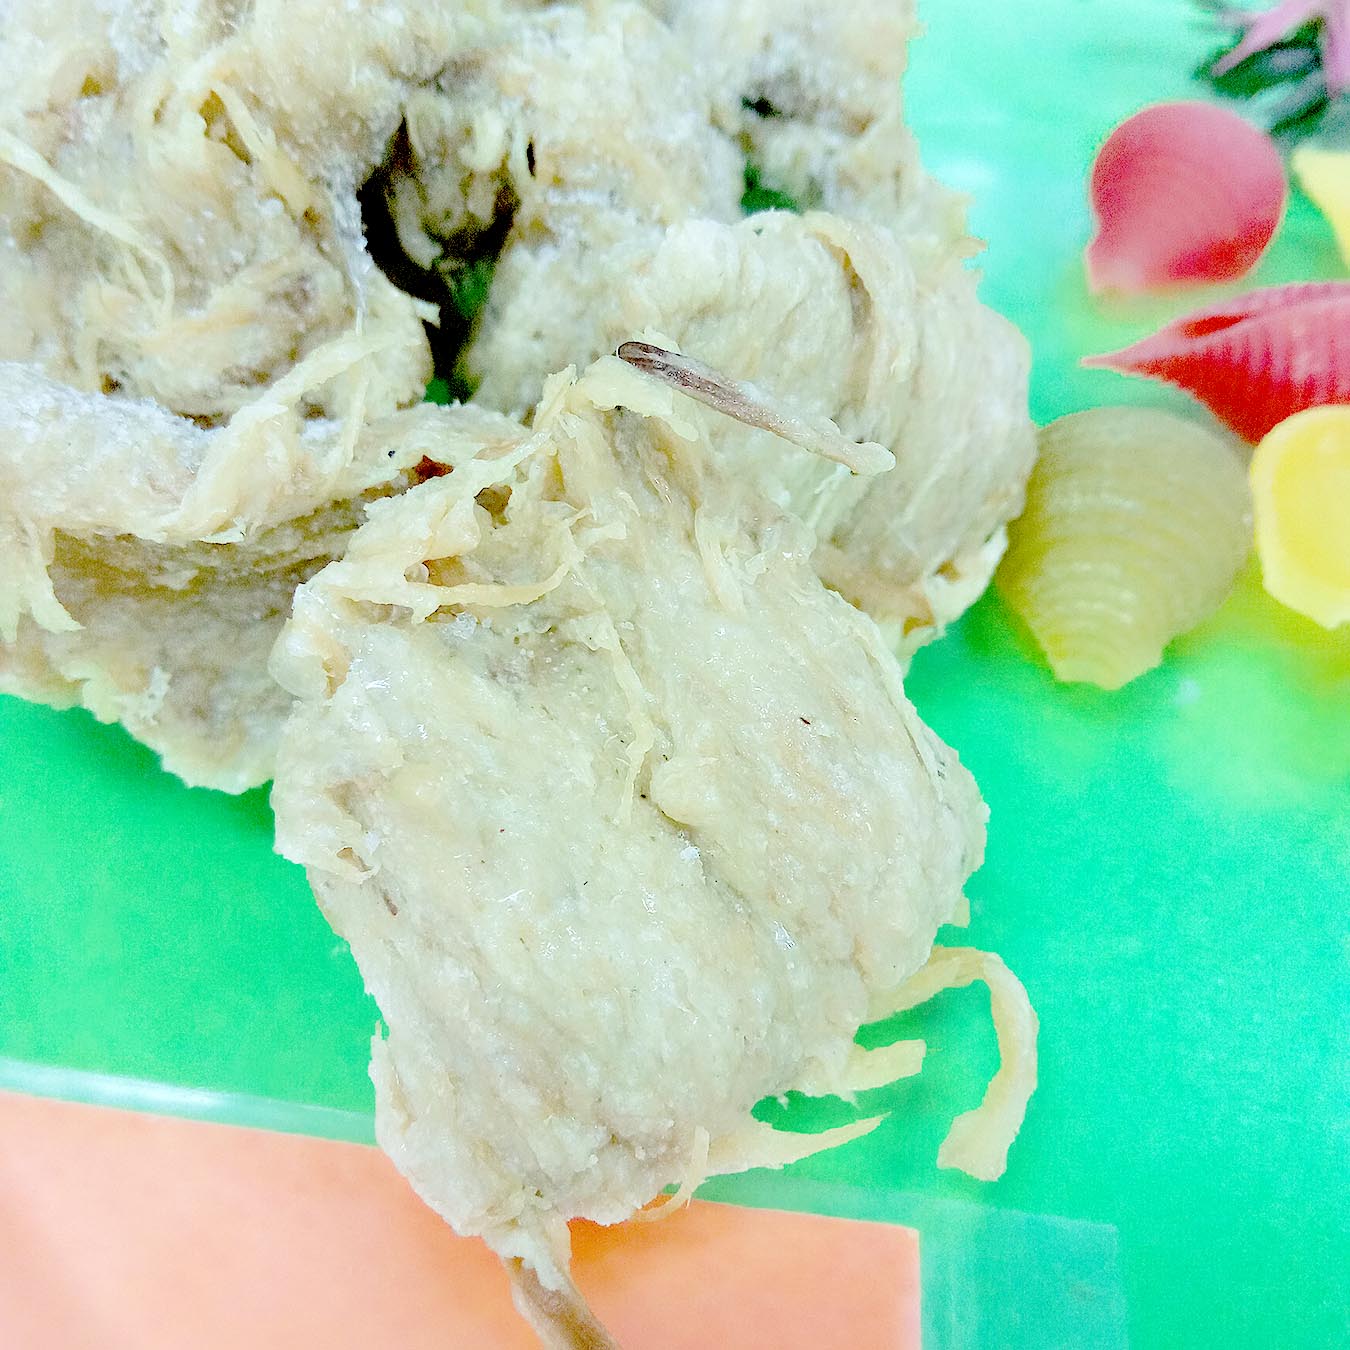 Image Stewed Mutton 桔缘香 - 炖羊肉风味(台) 600grams